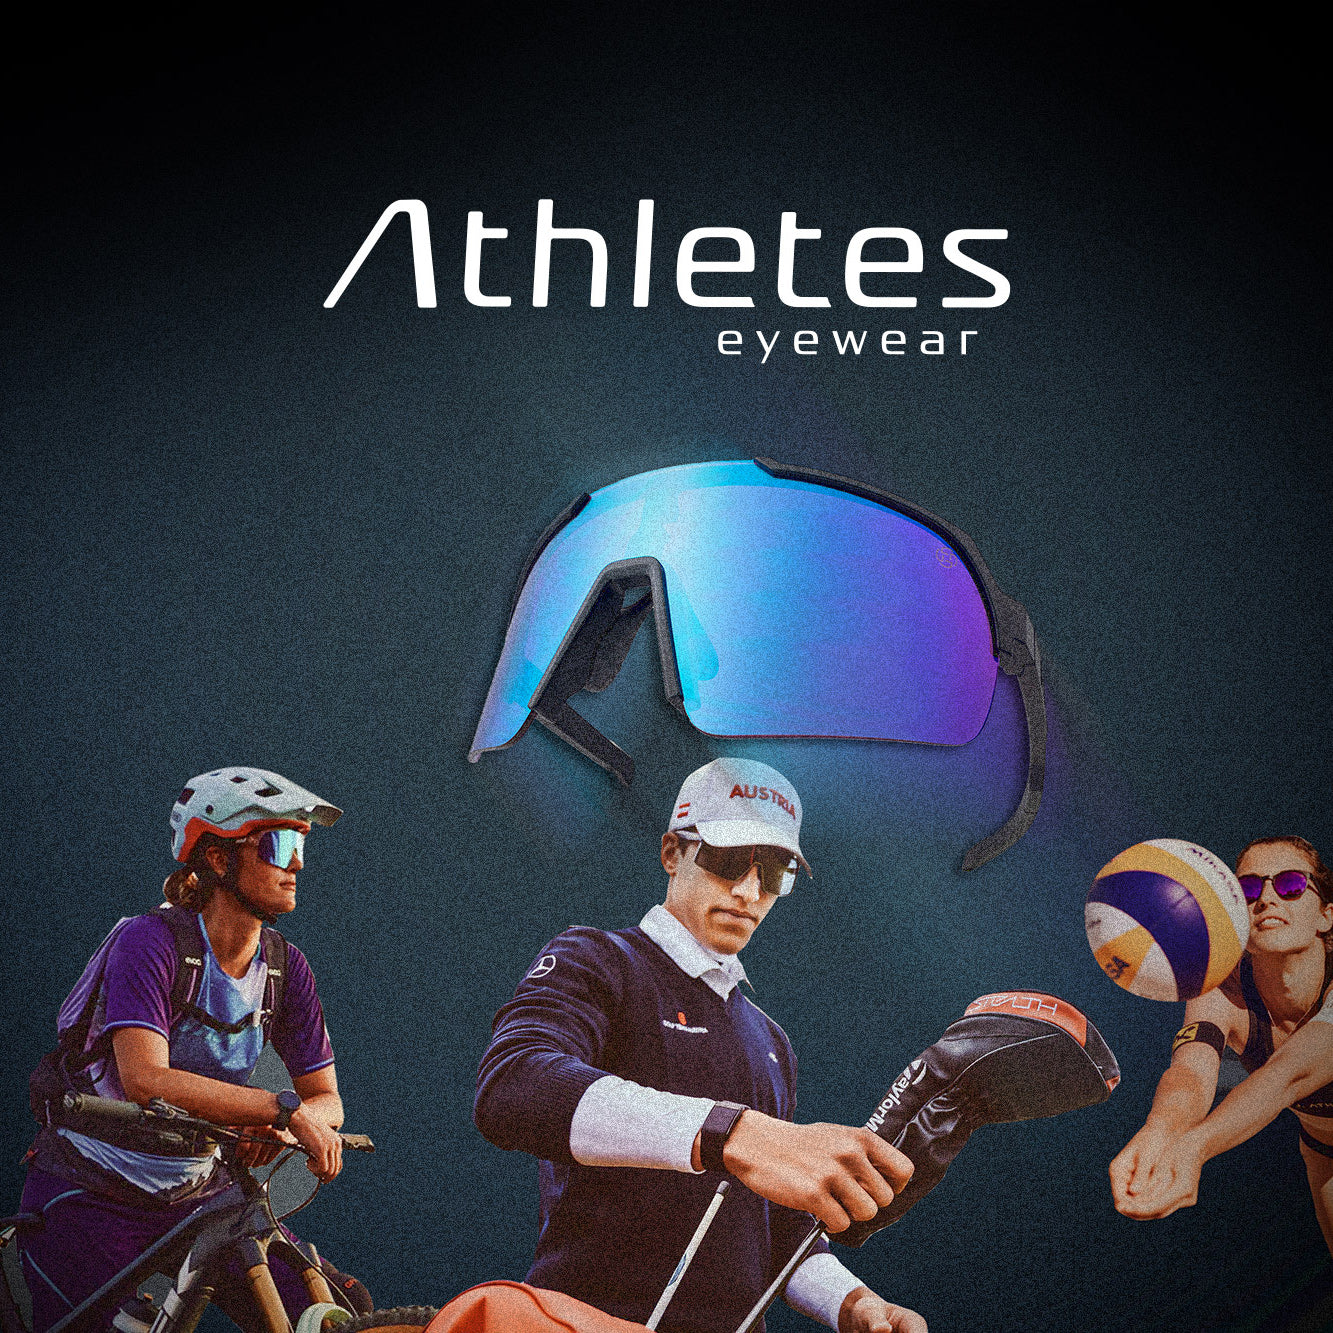 J. Athletics se convierte en Athletes eyewear